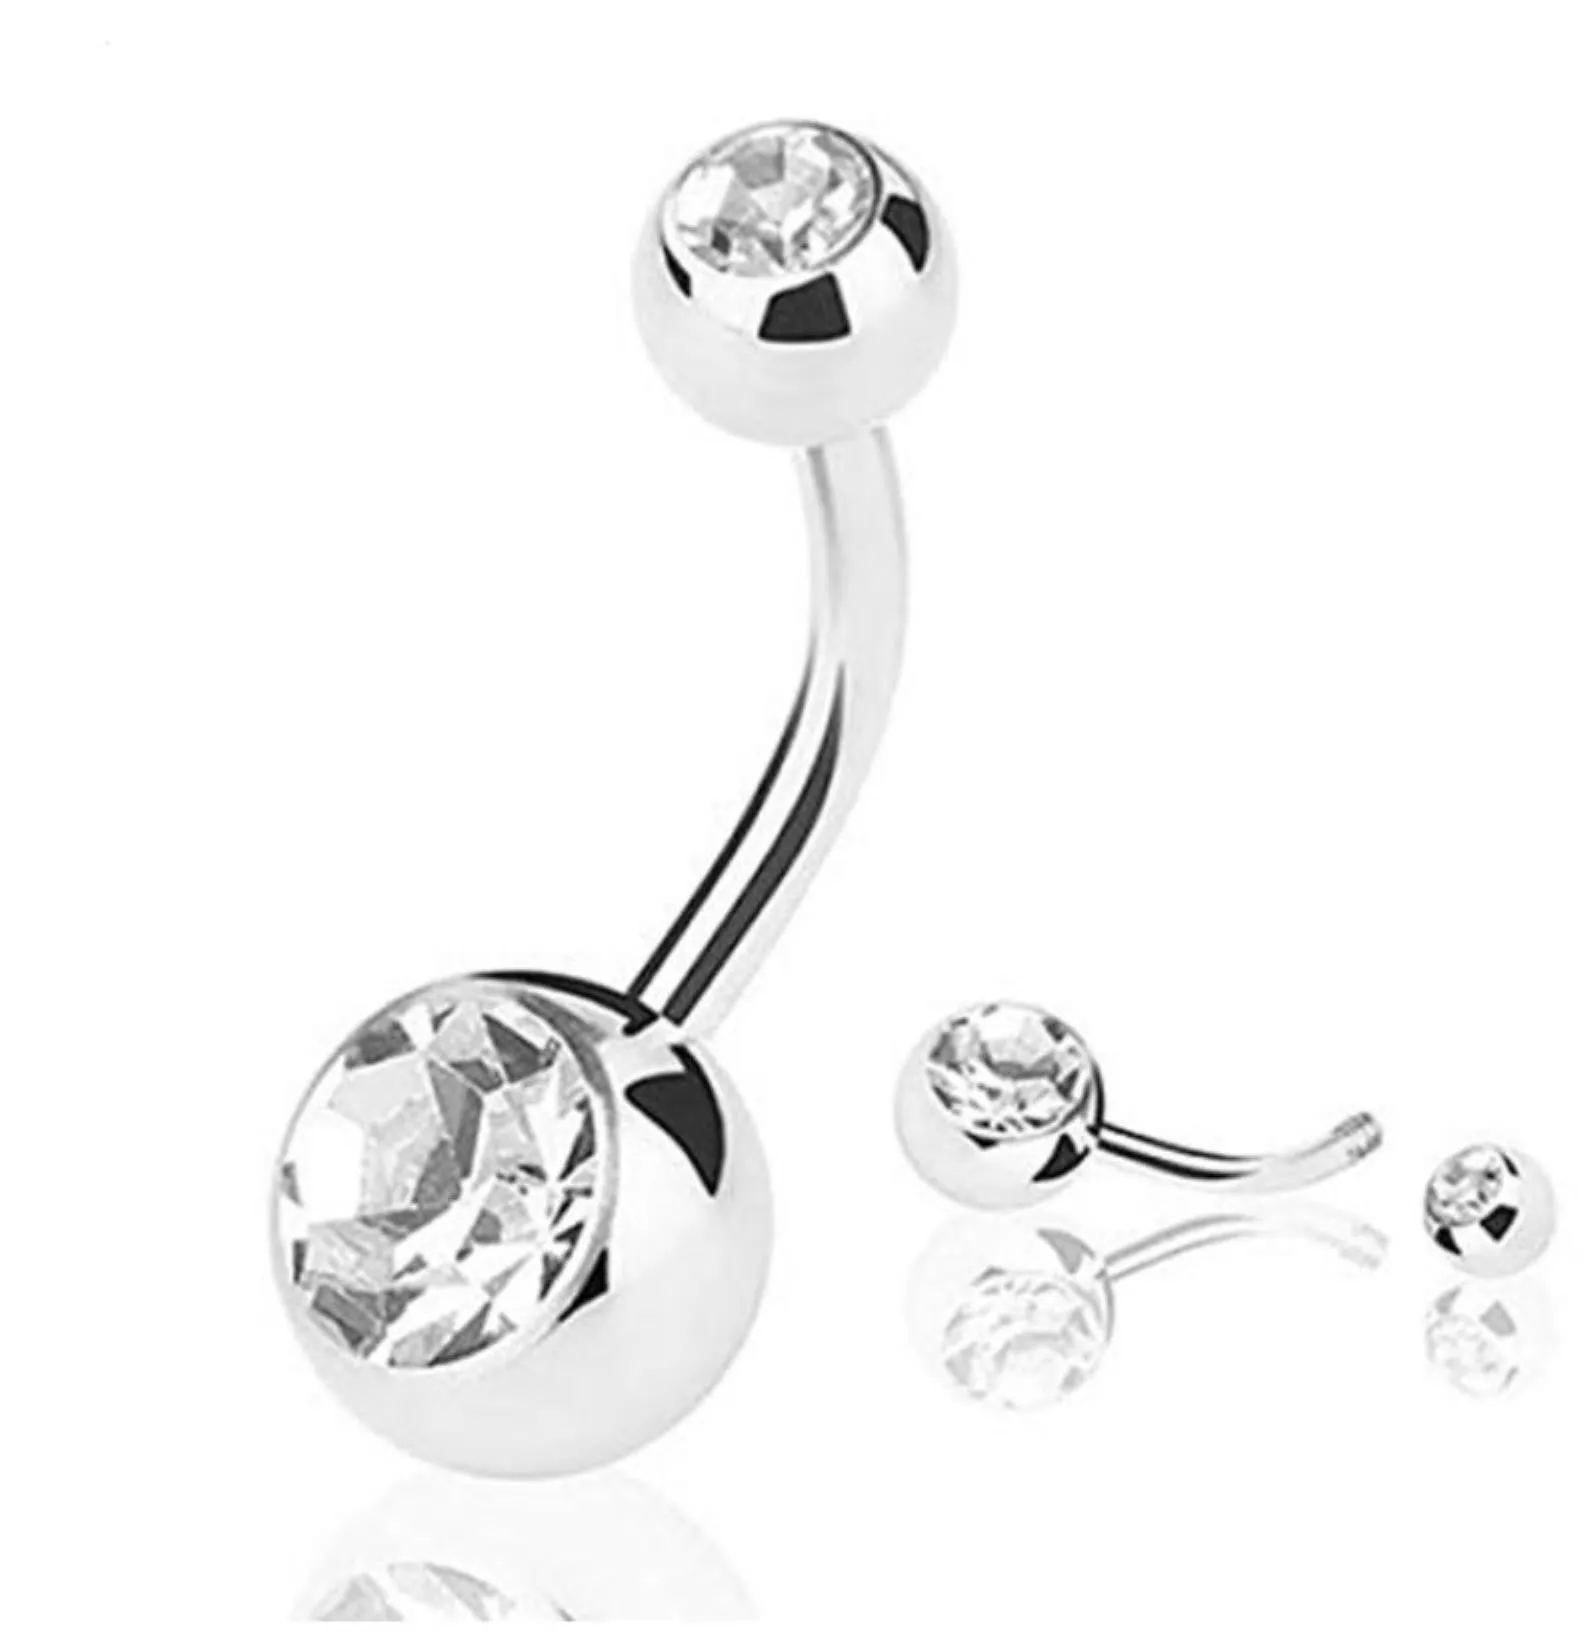 Steel belly button rings Navel Rings Crystal Rhinestone Body Piercing bars Jewlery for women`s bikini fashion Jewelry ps2014